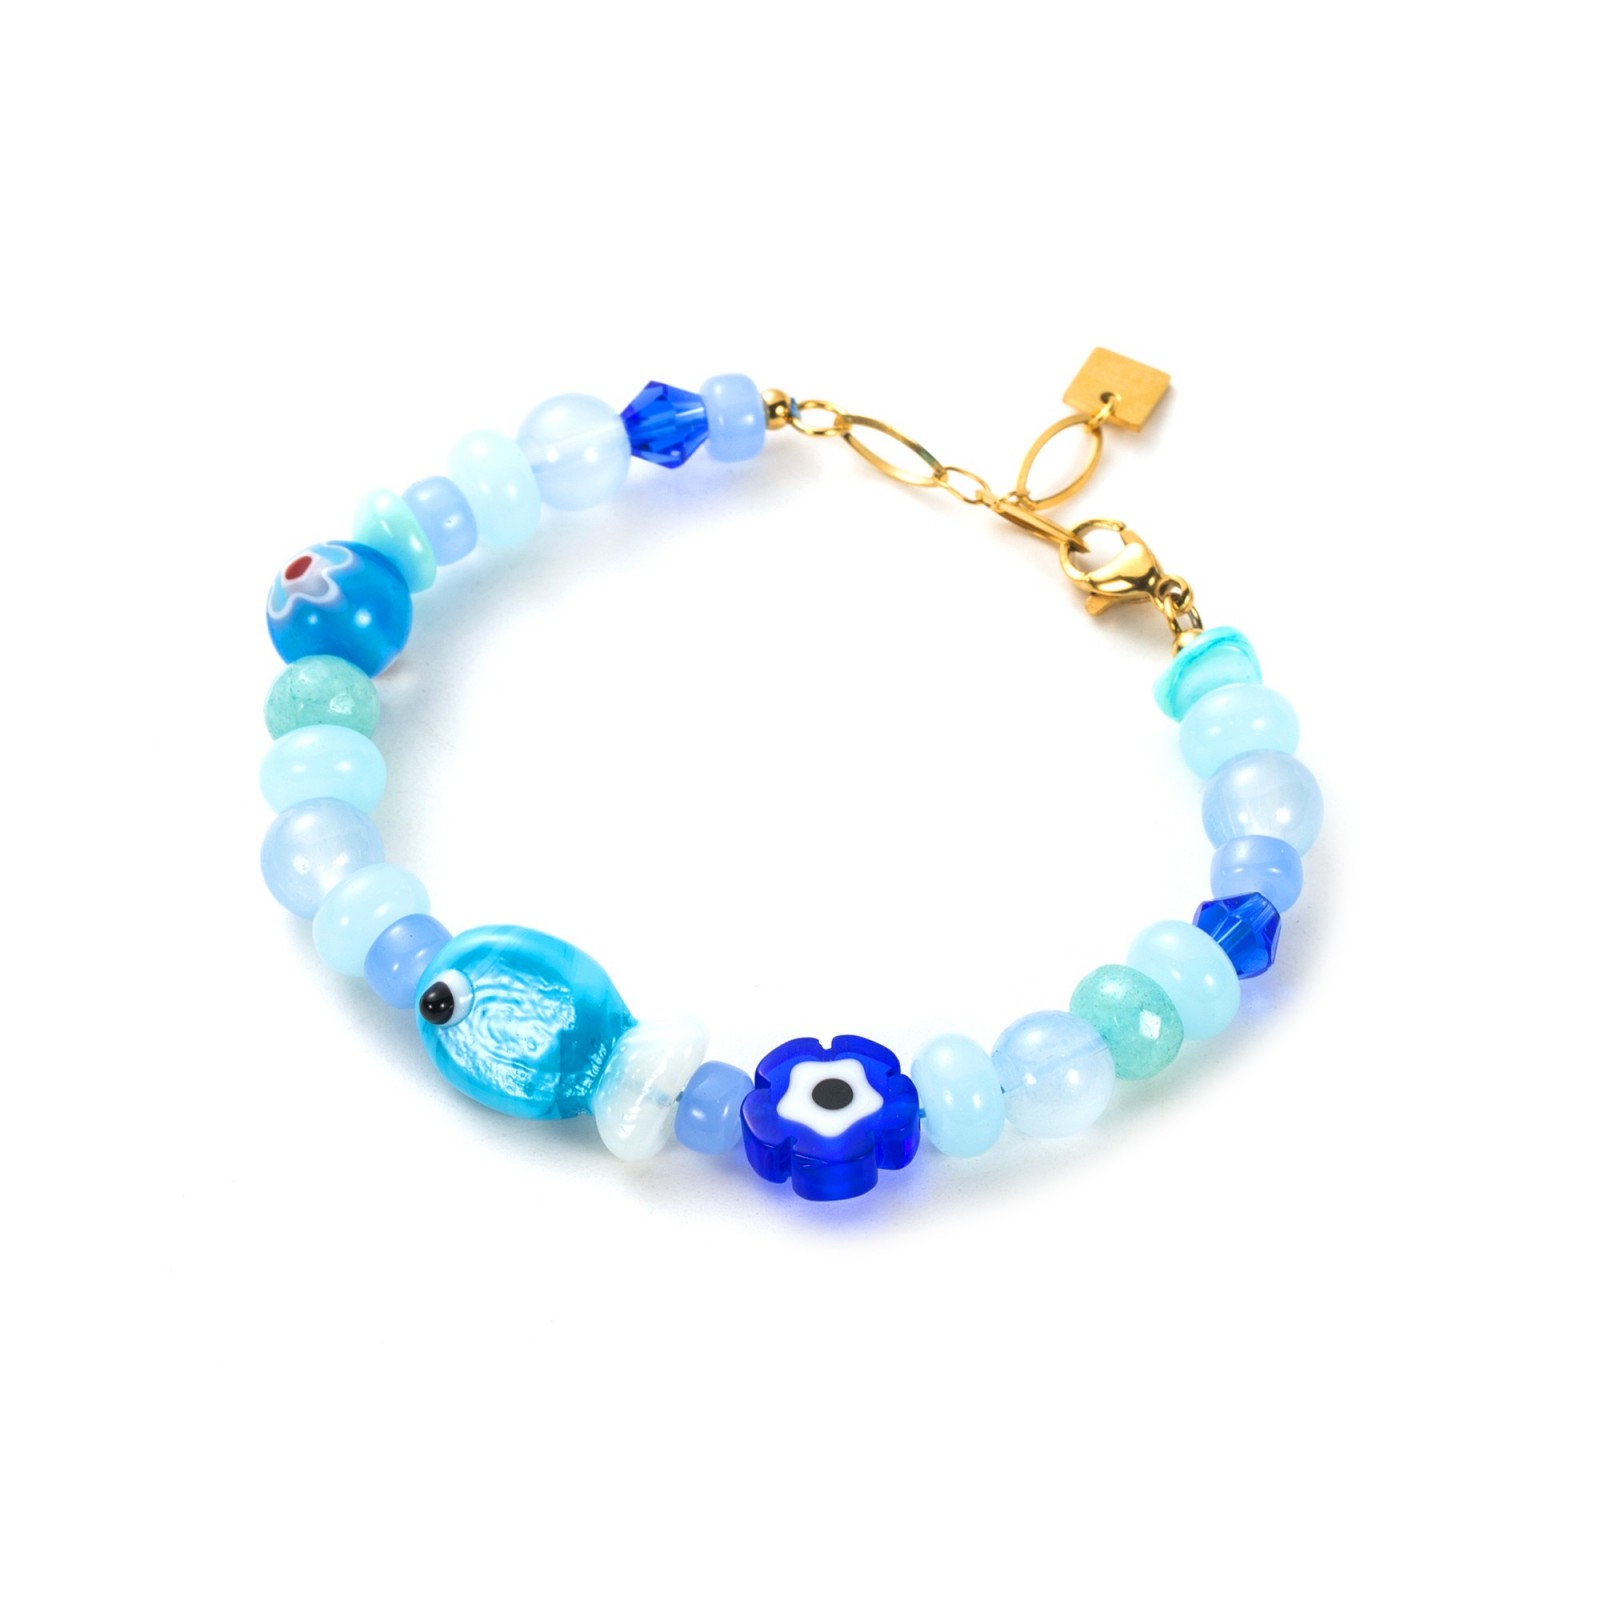 Bracelet Color:Blue